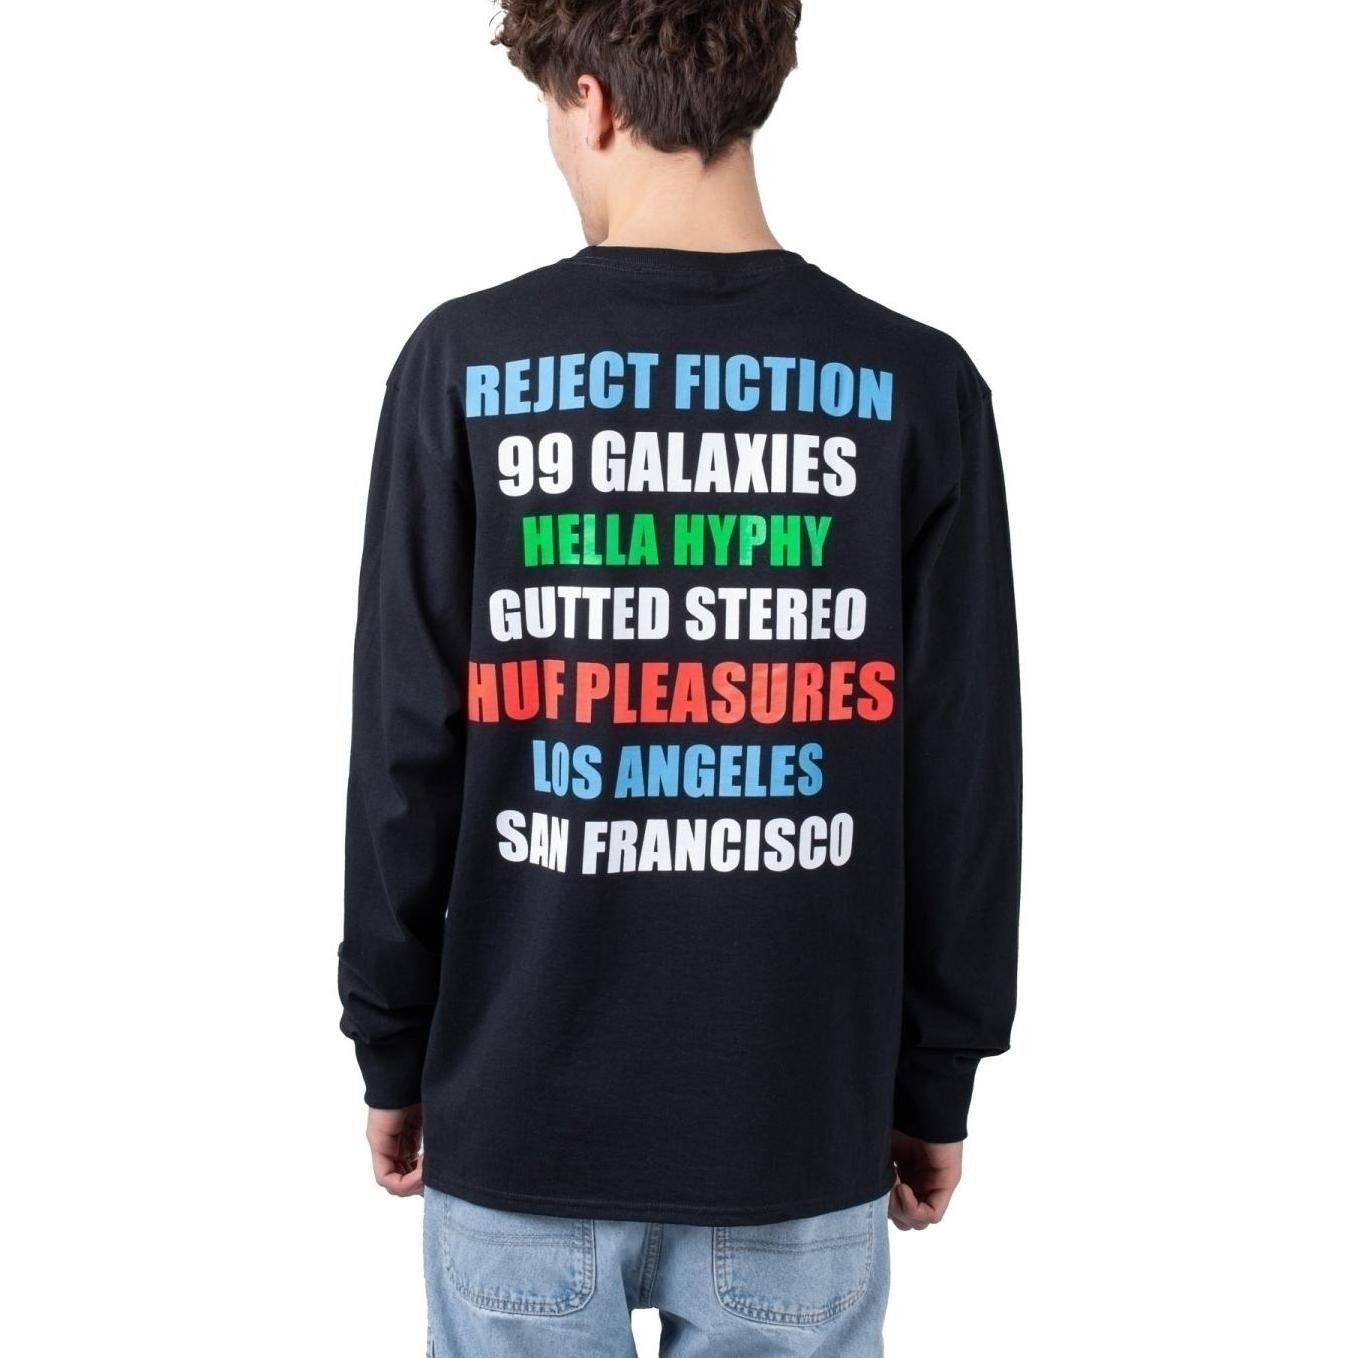 Longsleeve HUF HUF Galaxies Sweater x 12 Pleasures